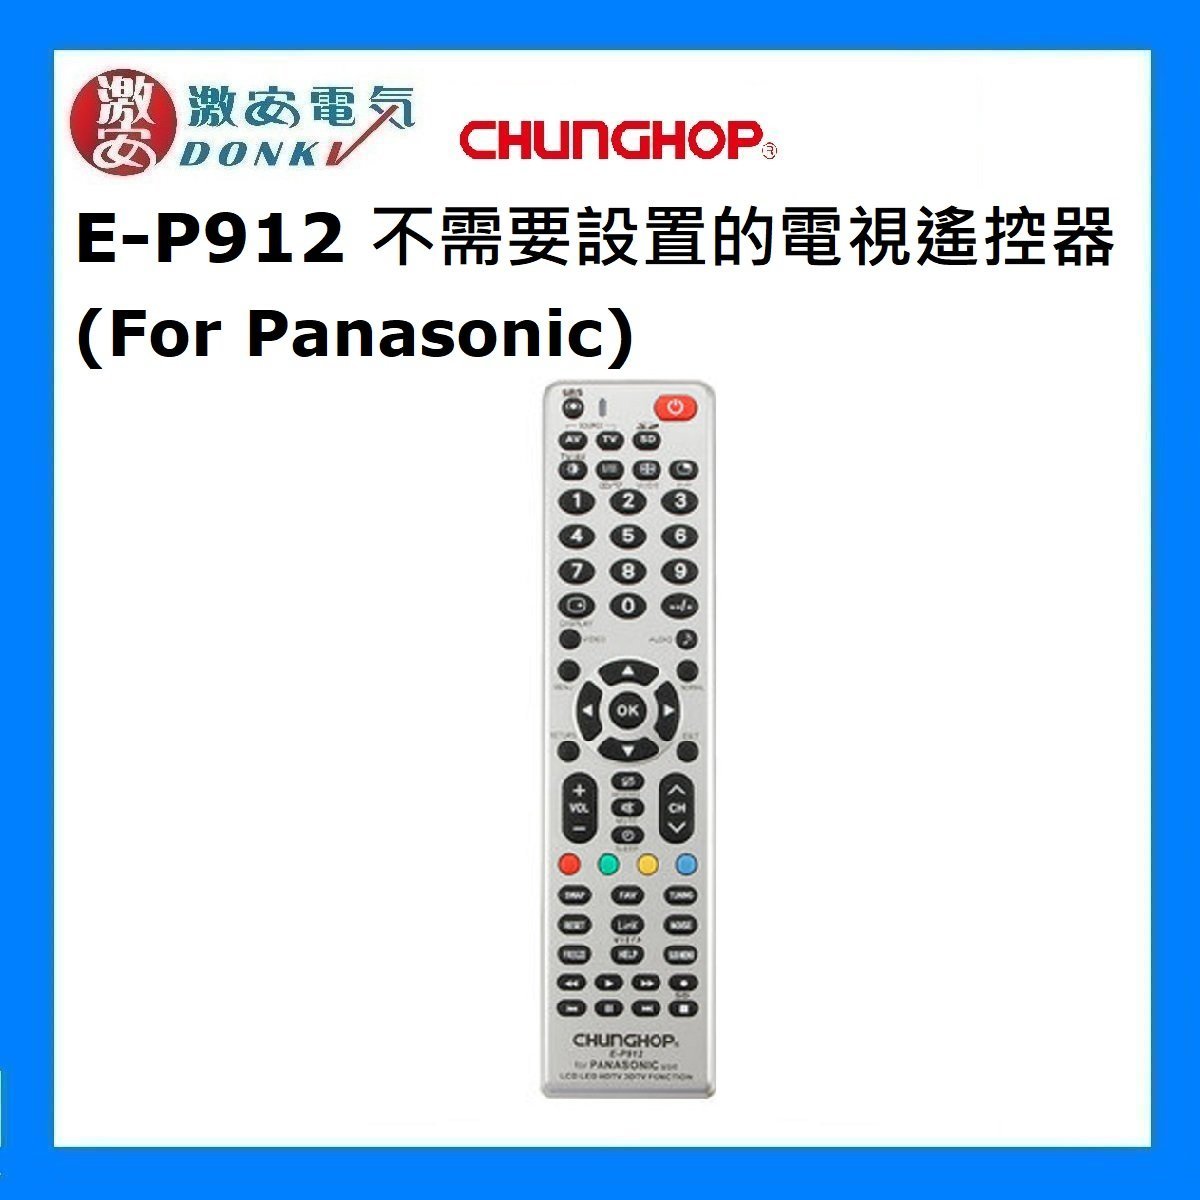 E-P912 不需要設置的電視遙控器 (FOR Panasonic) [平行進口]